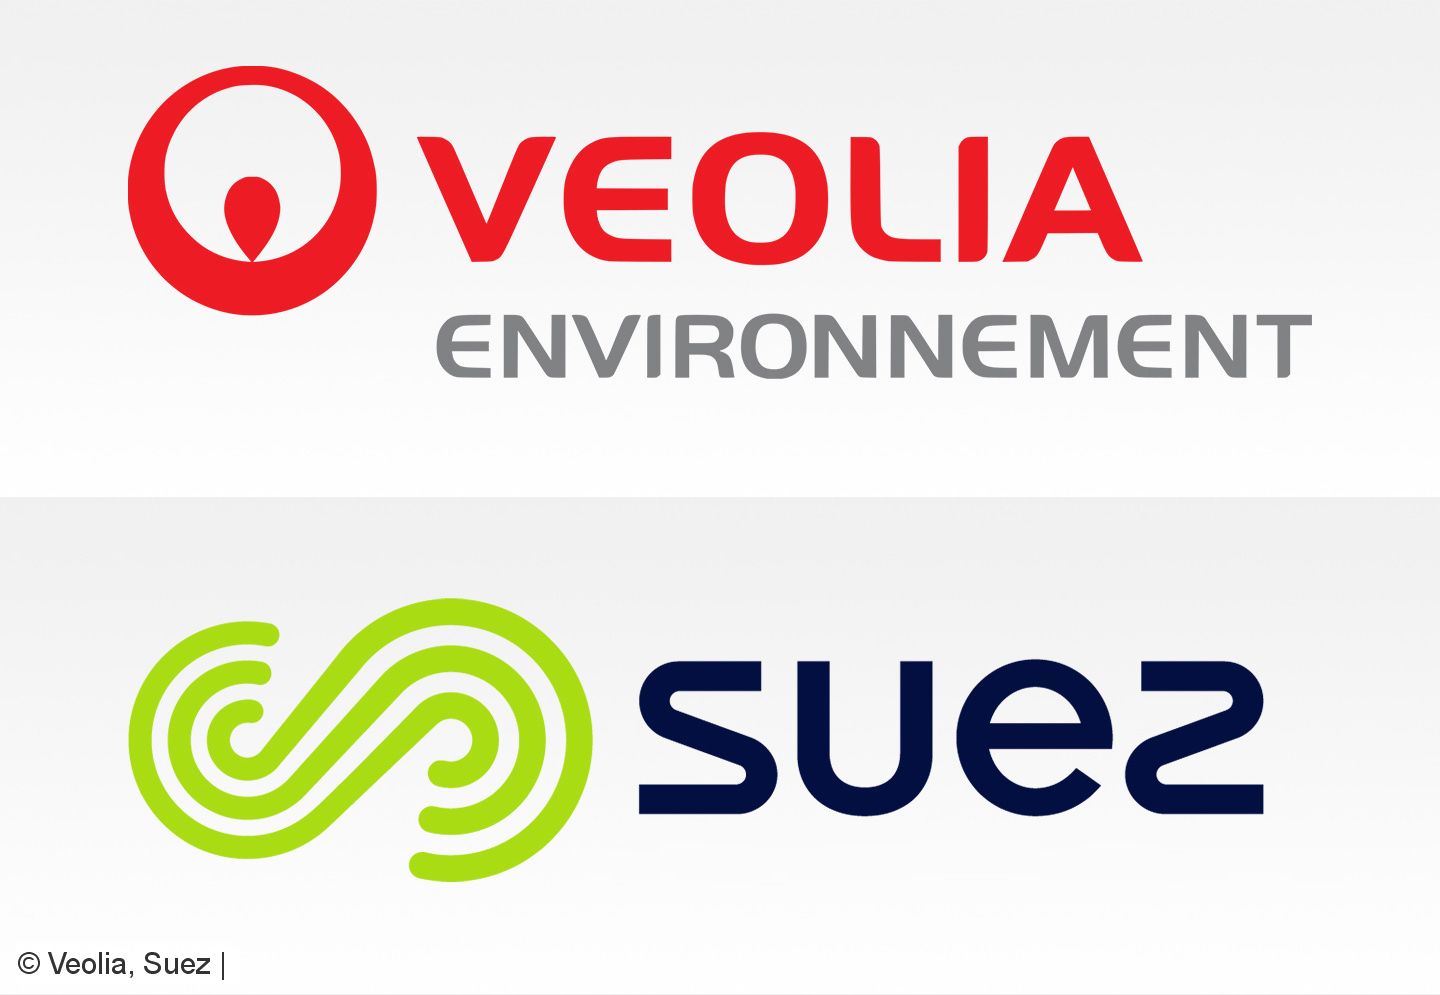 Veolia and Suez logos